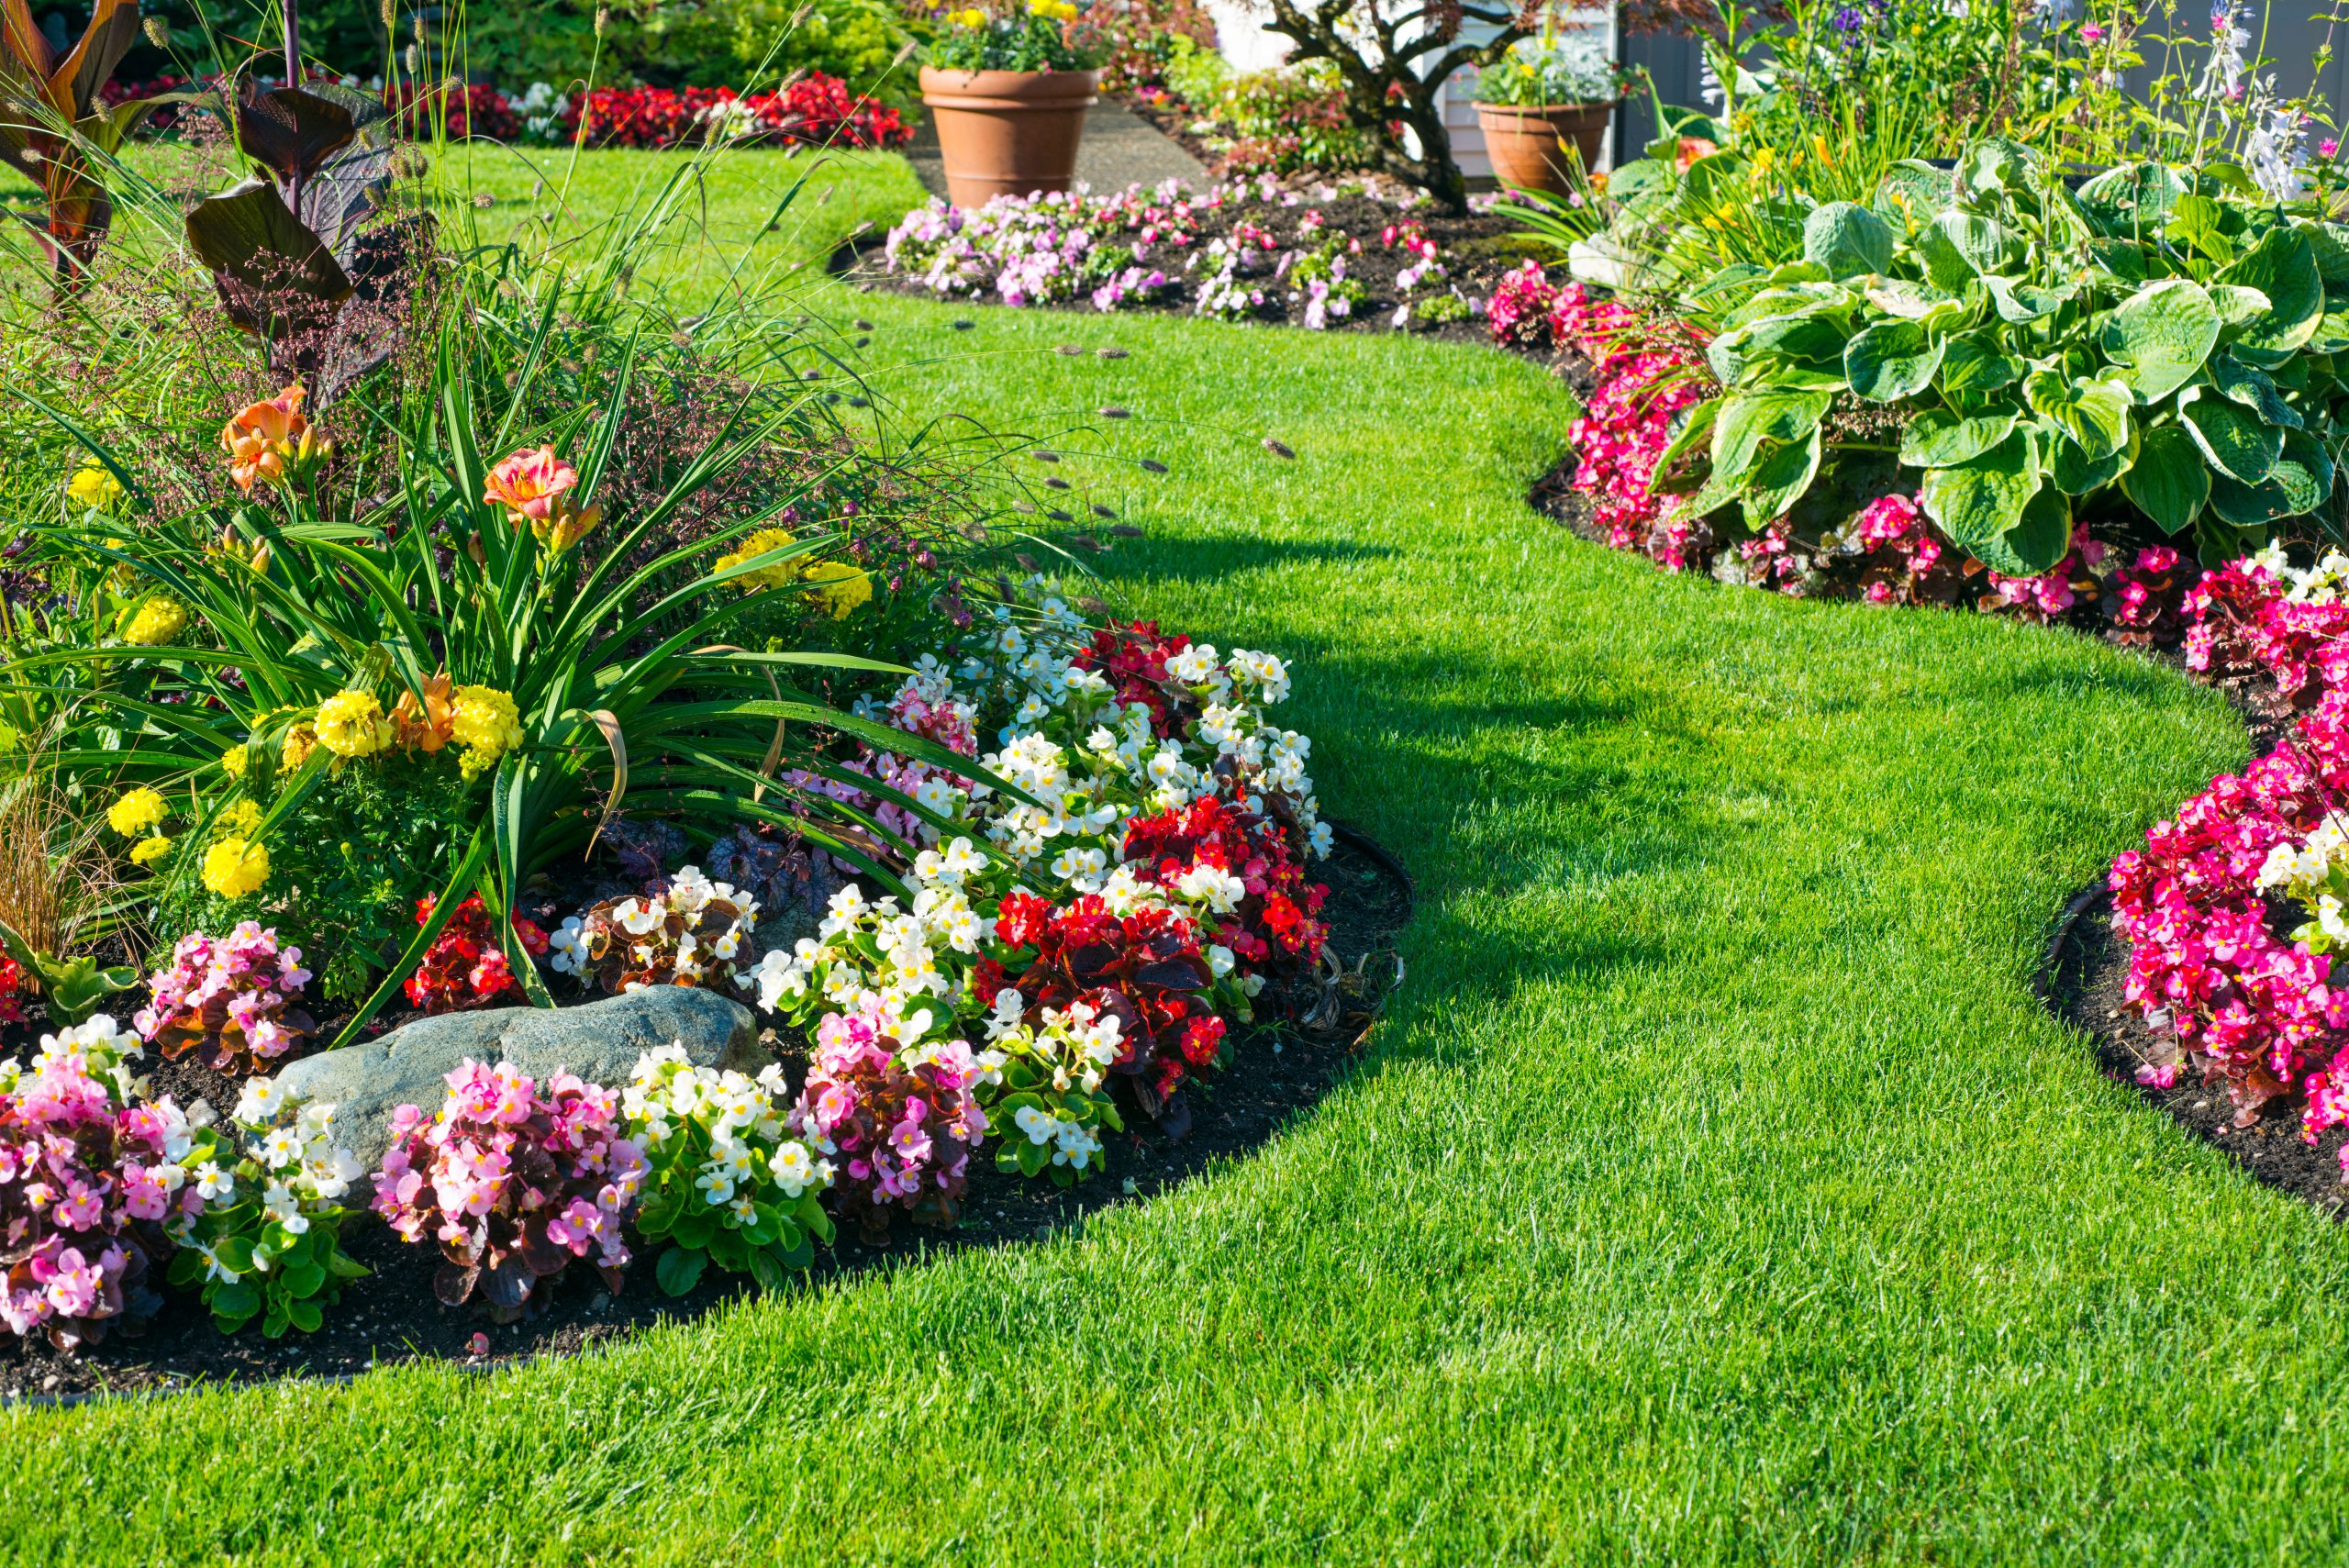 Simple Ways to Make the Garden More Enjoyable